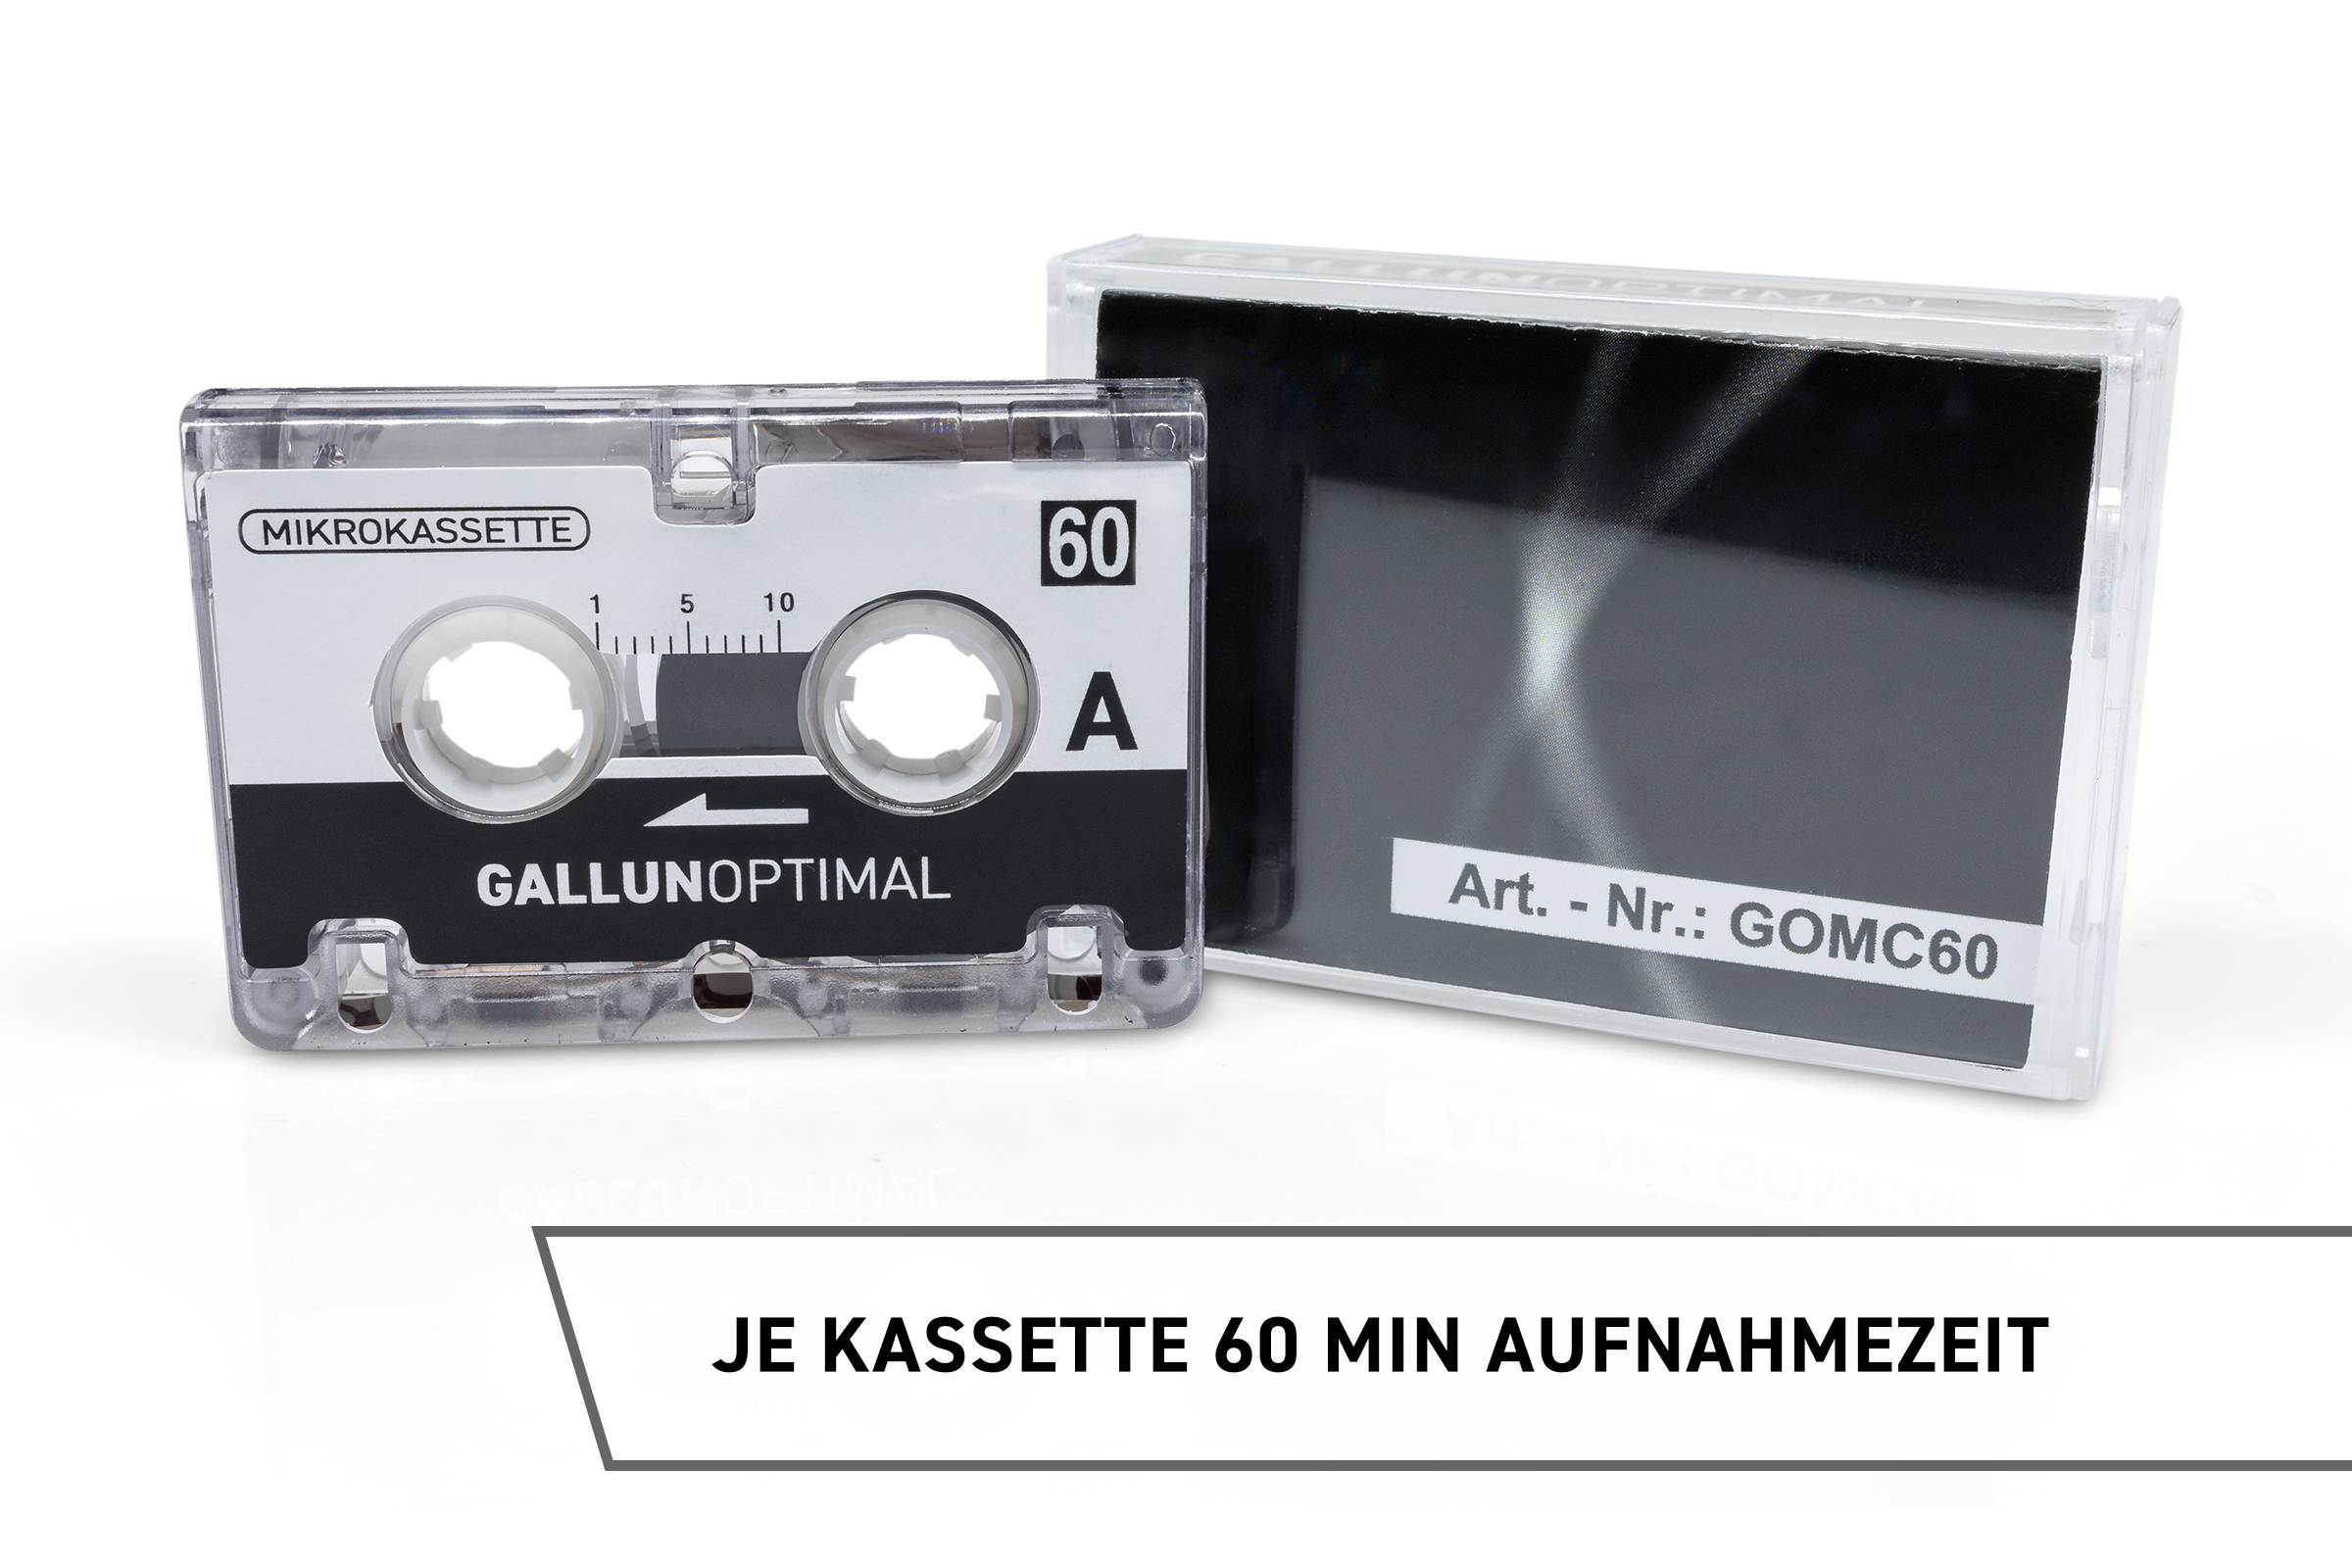 Audiokassette, GALLUNOPTIMAL 3er-Pack schwarz/weiß Type MC60 min. 60 Microkassette